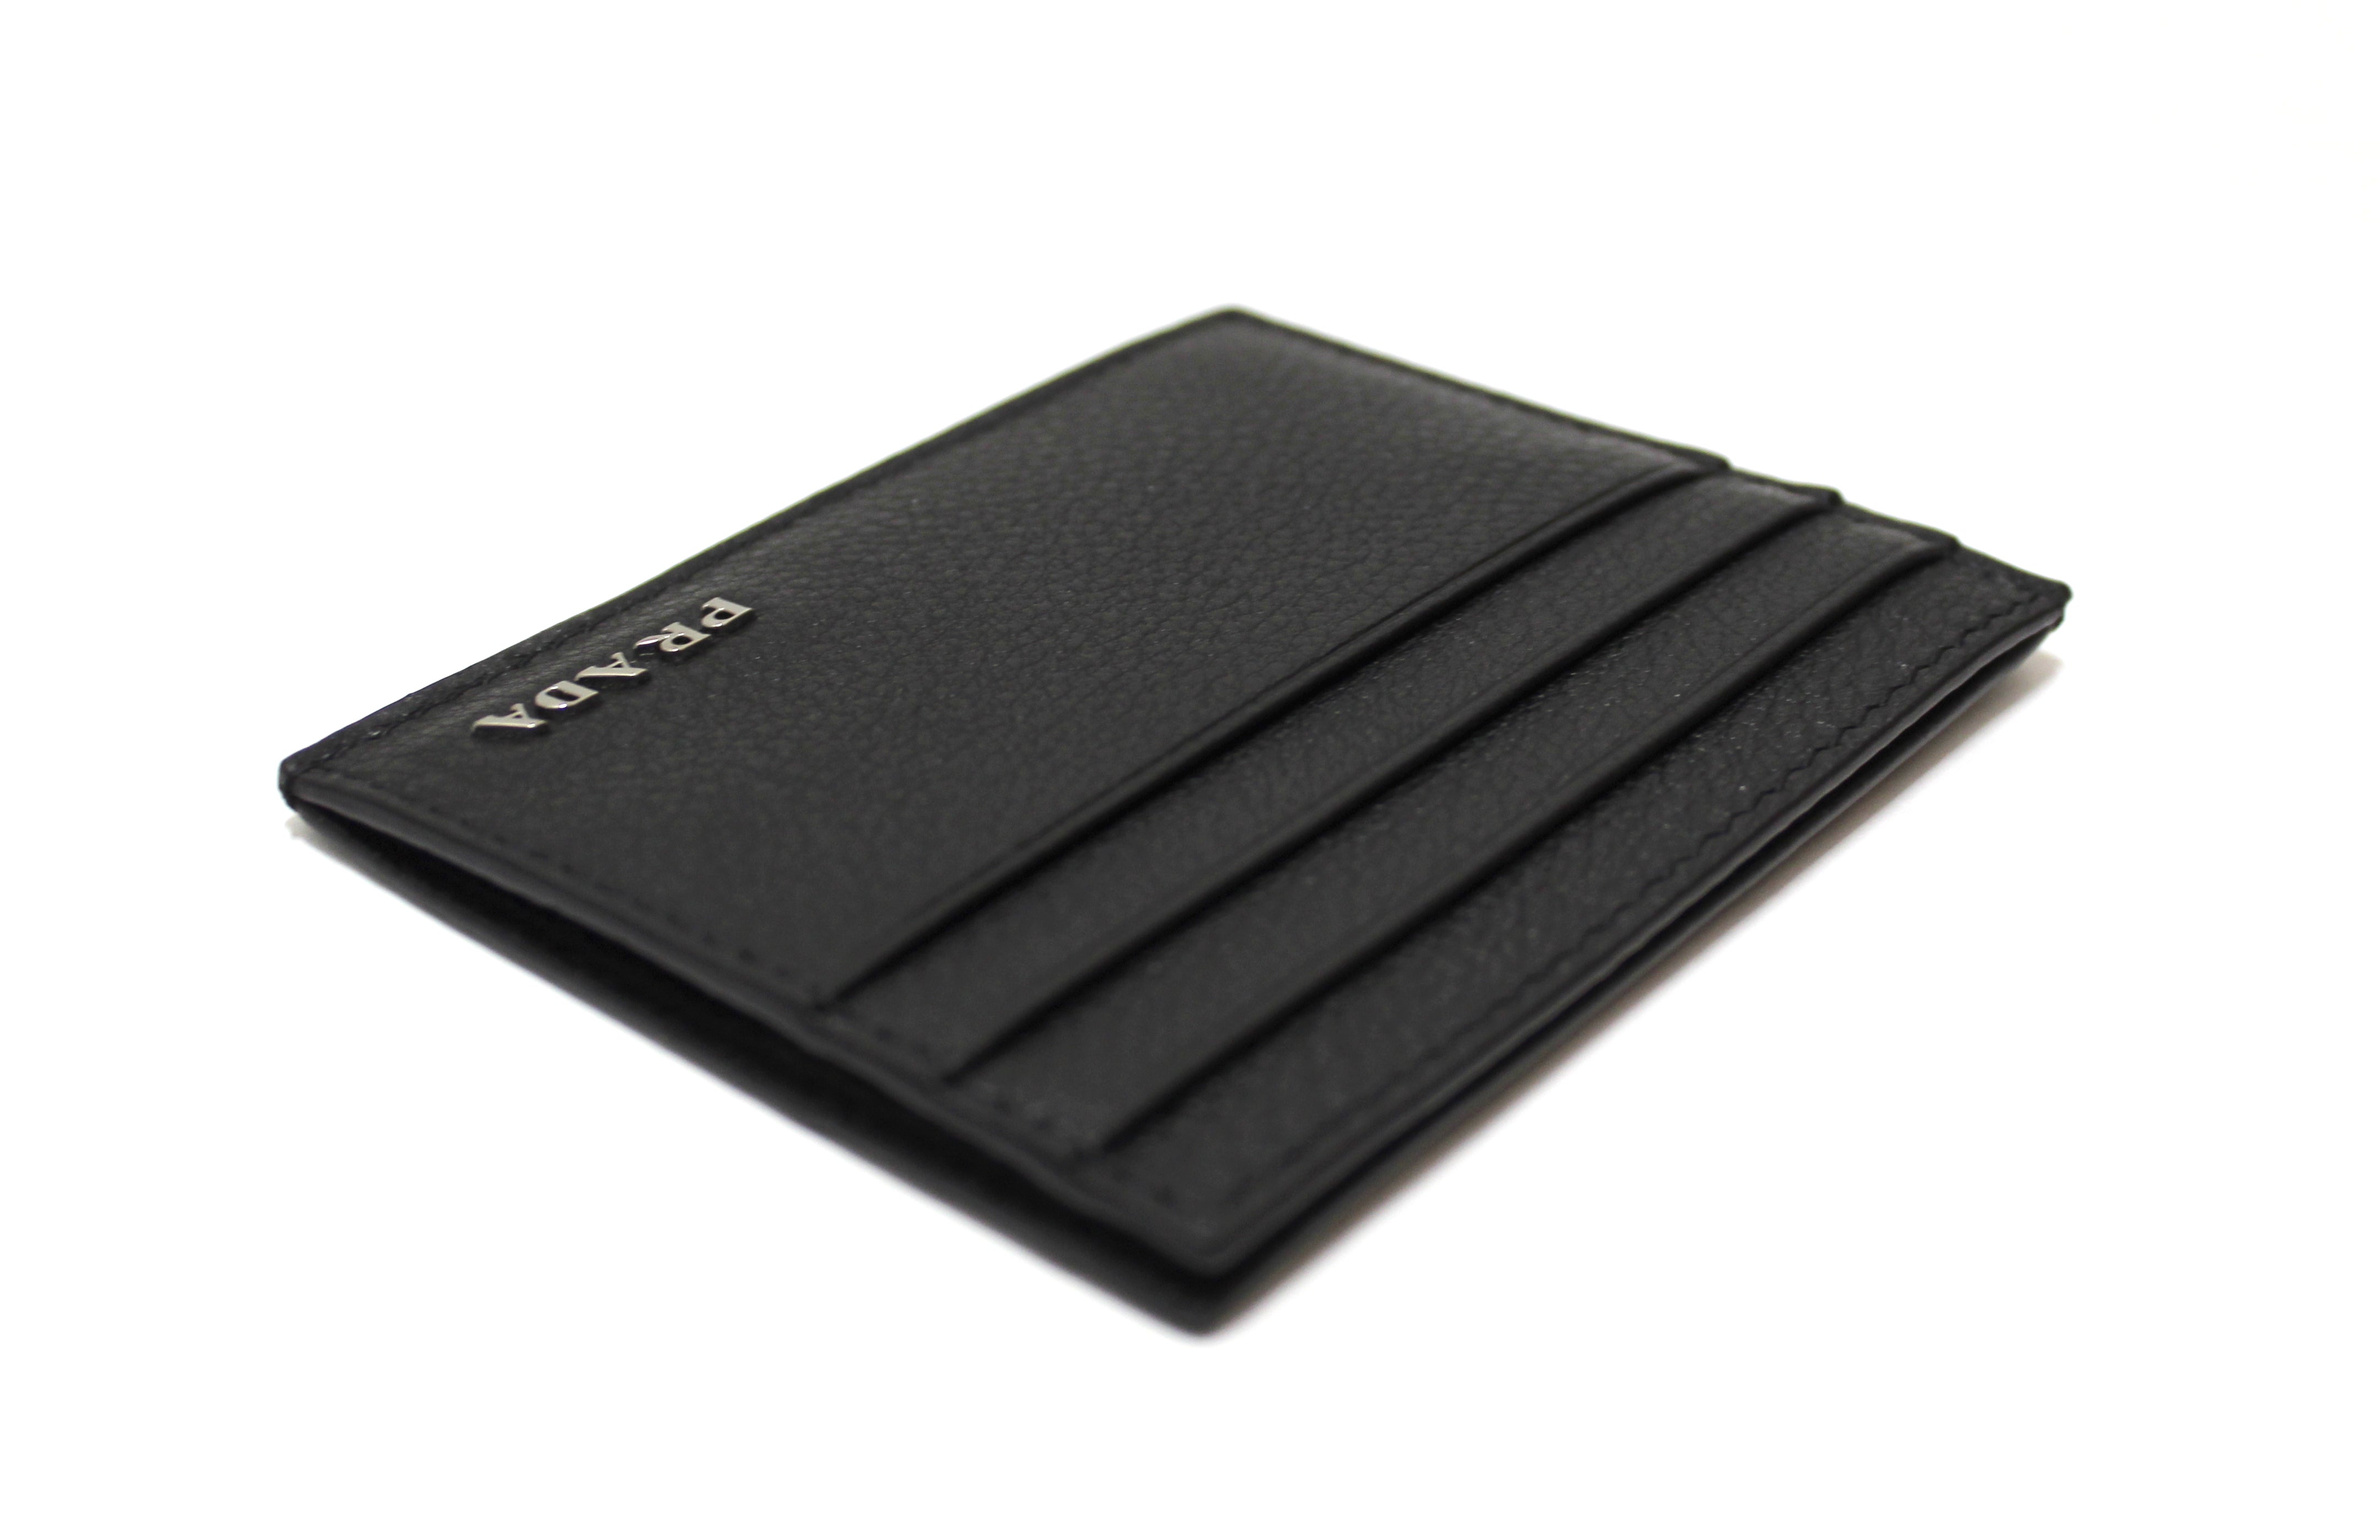 Authentic New Prada Black Calfskin PortaCarte Cardholder